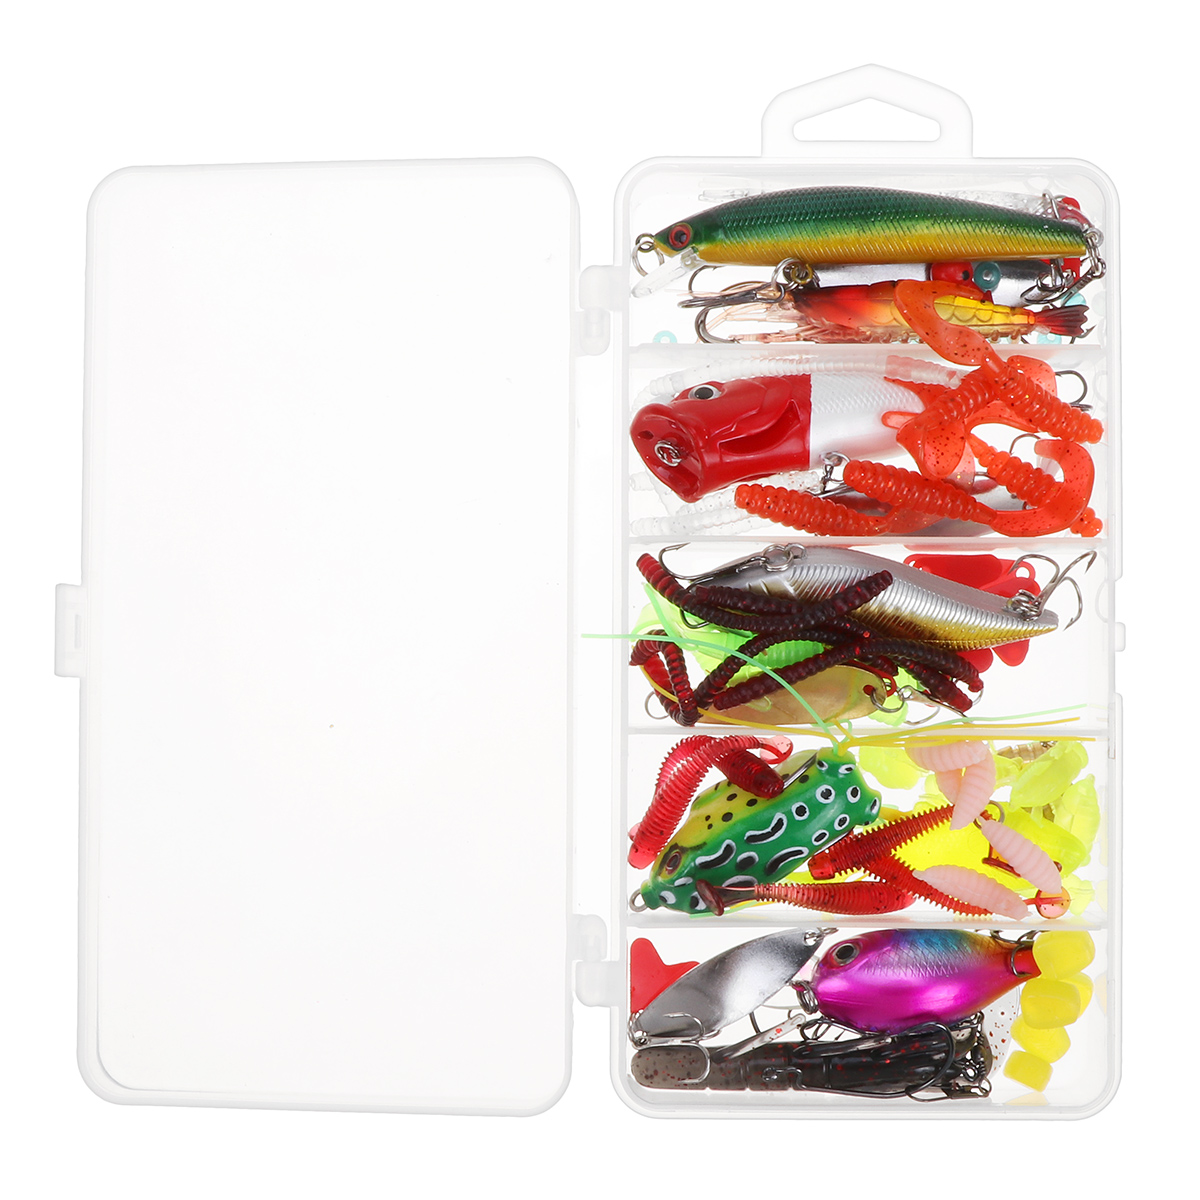 Fishing-Accessories-Kit-Fishing-Tackle-Set-Tackle-Box-Pliers-Jig-Hooks-Tools-Kit-1739922-8